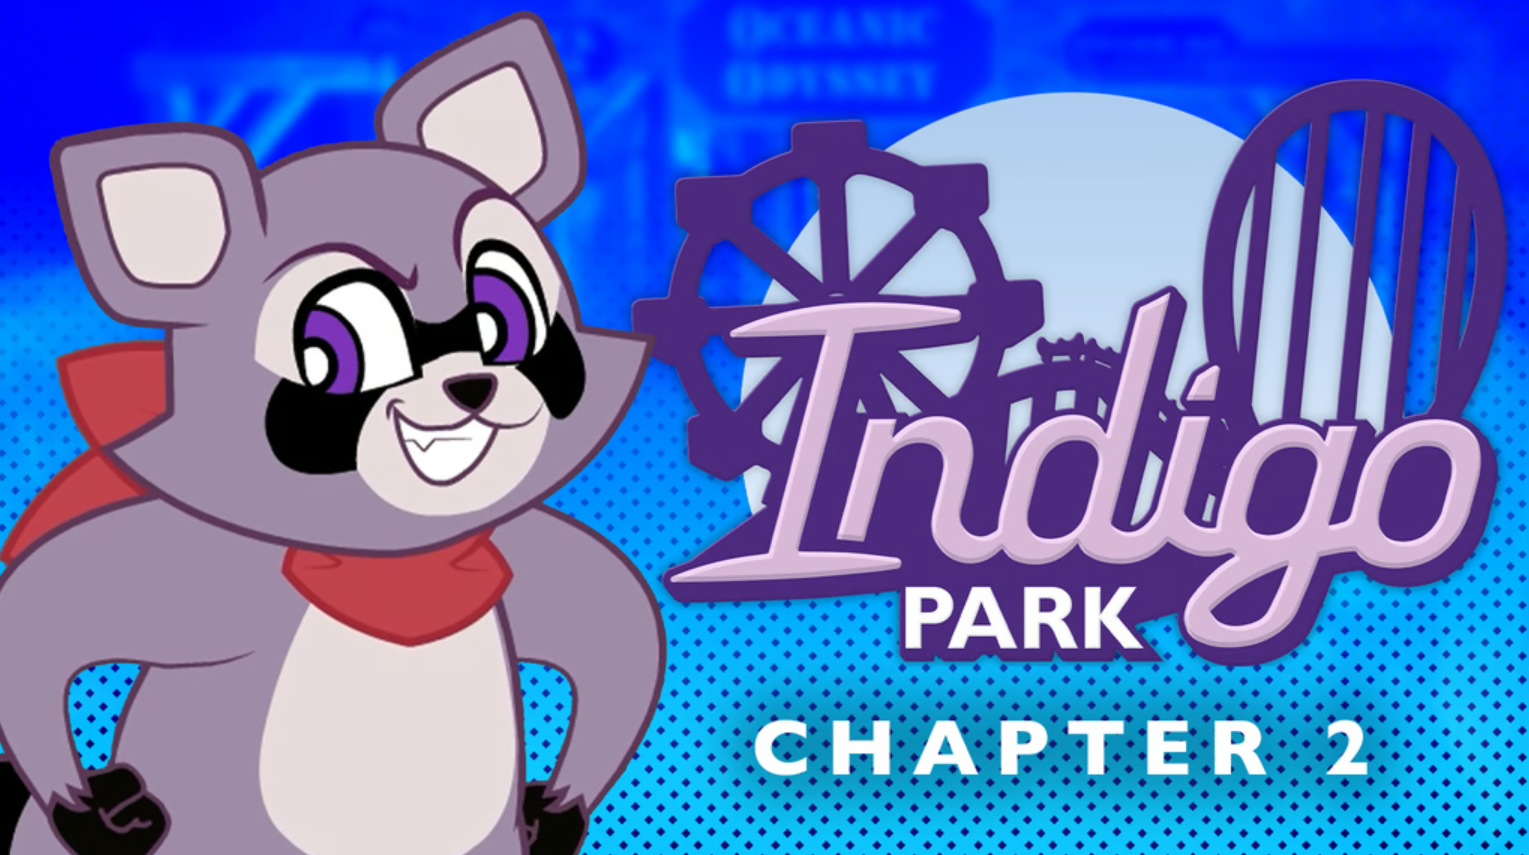 Indigo Park: Chapter 2 smashes Kickstarter goal following viral success